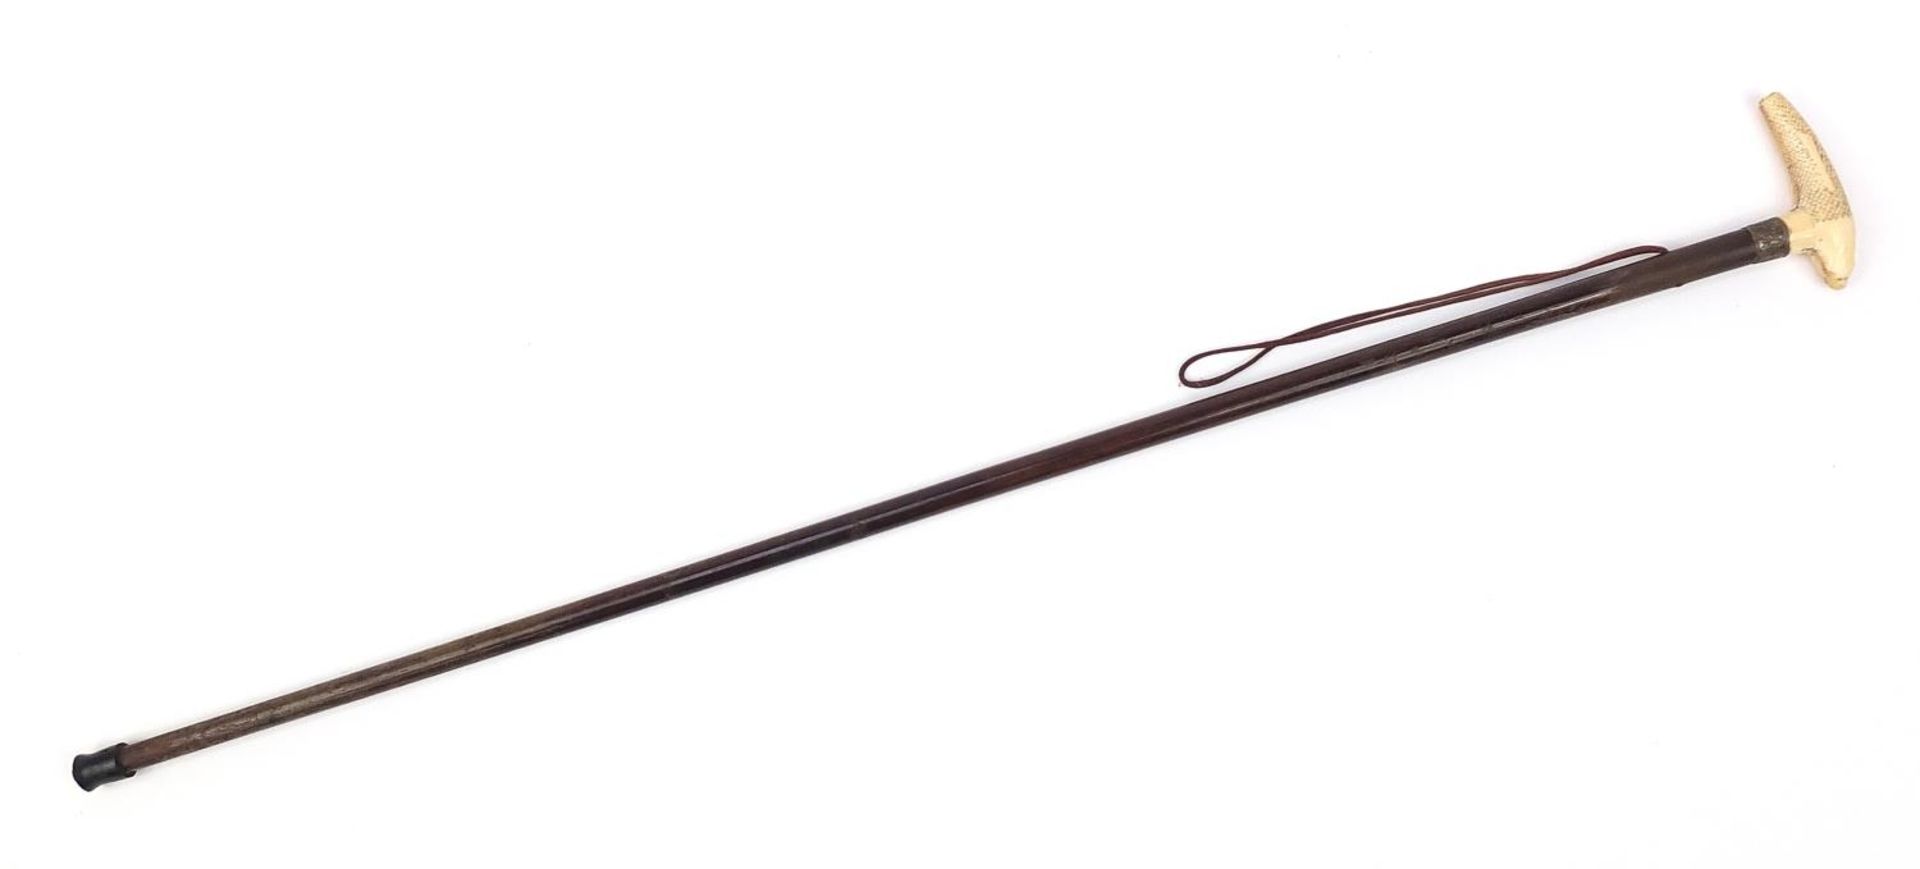 Hardwood walking stick with carved ivory Koi carp handle, 88cm in length - Image 3 of 7